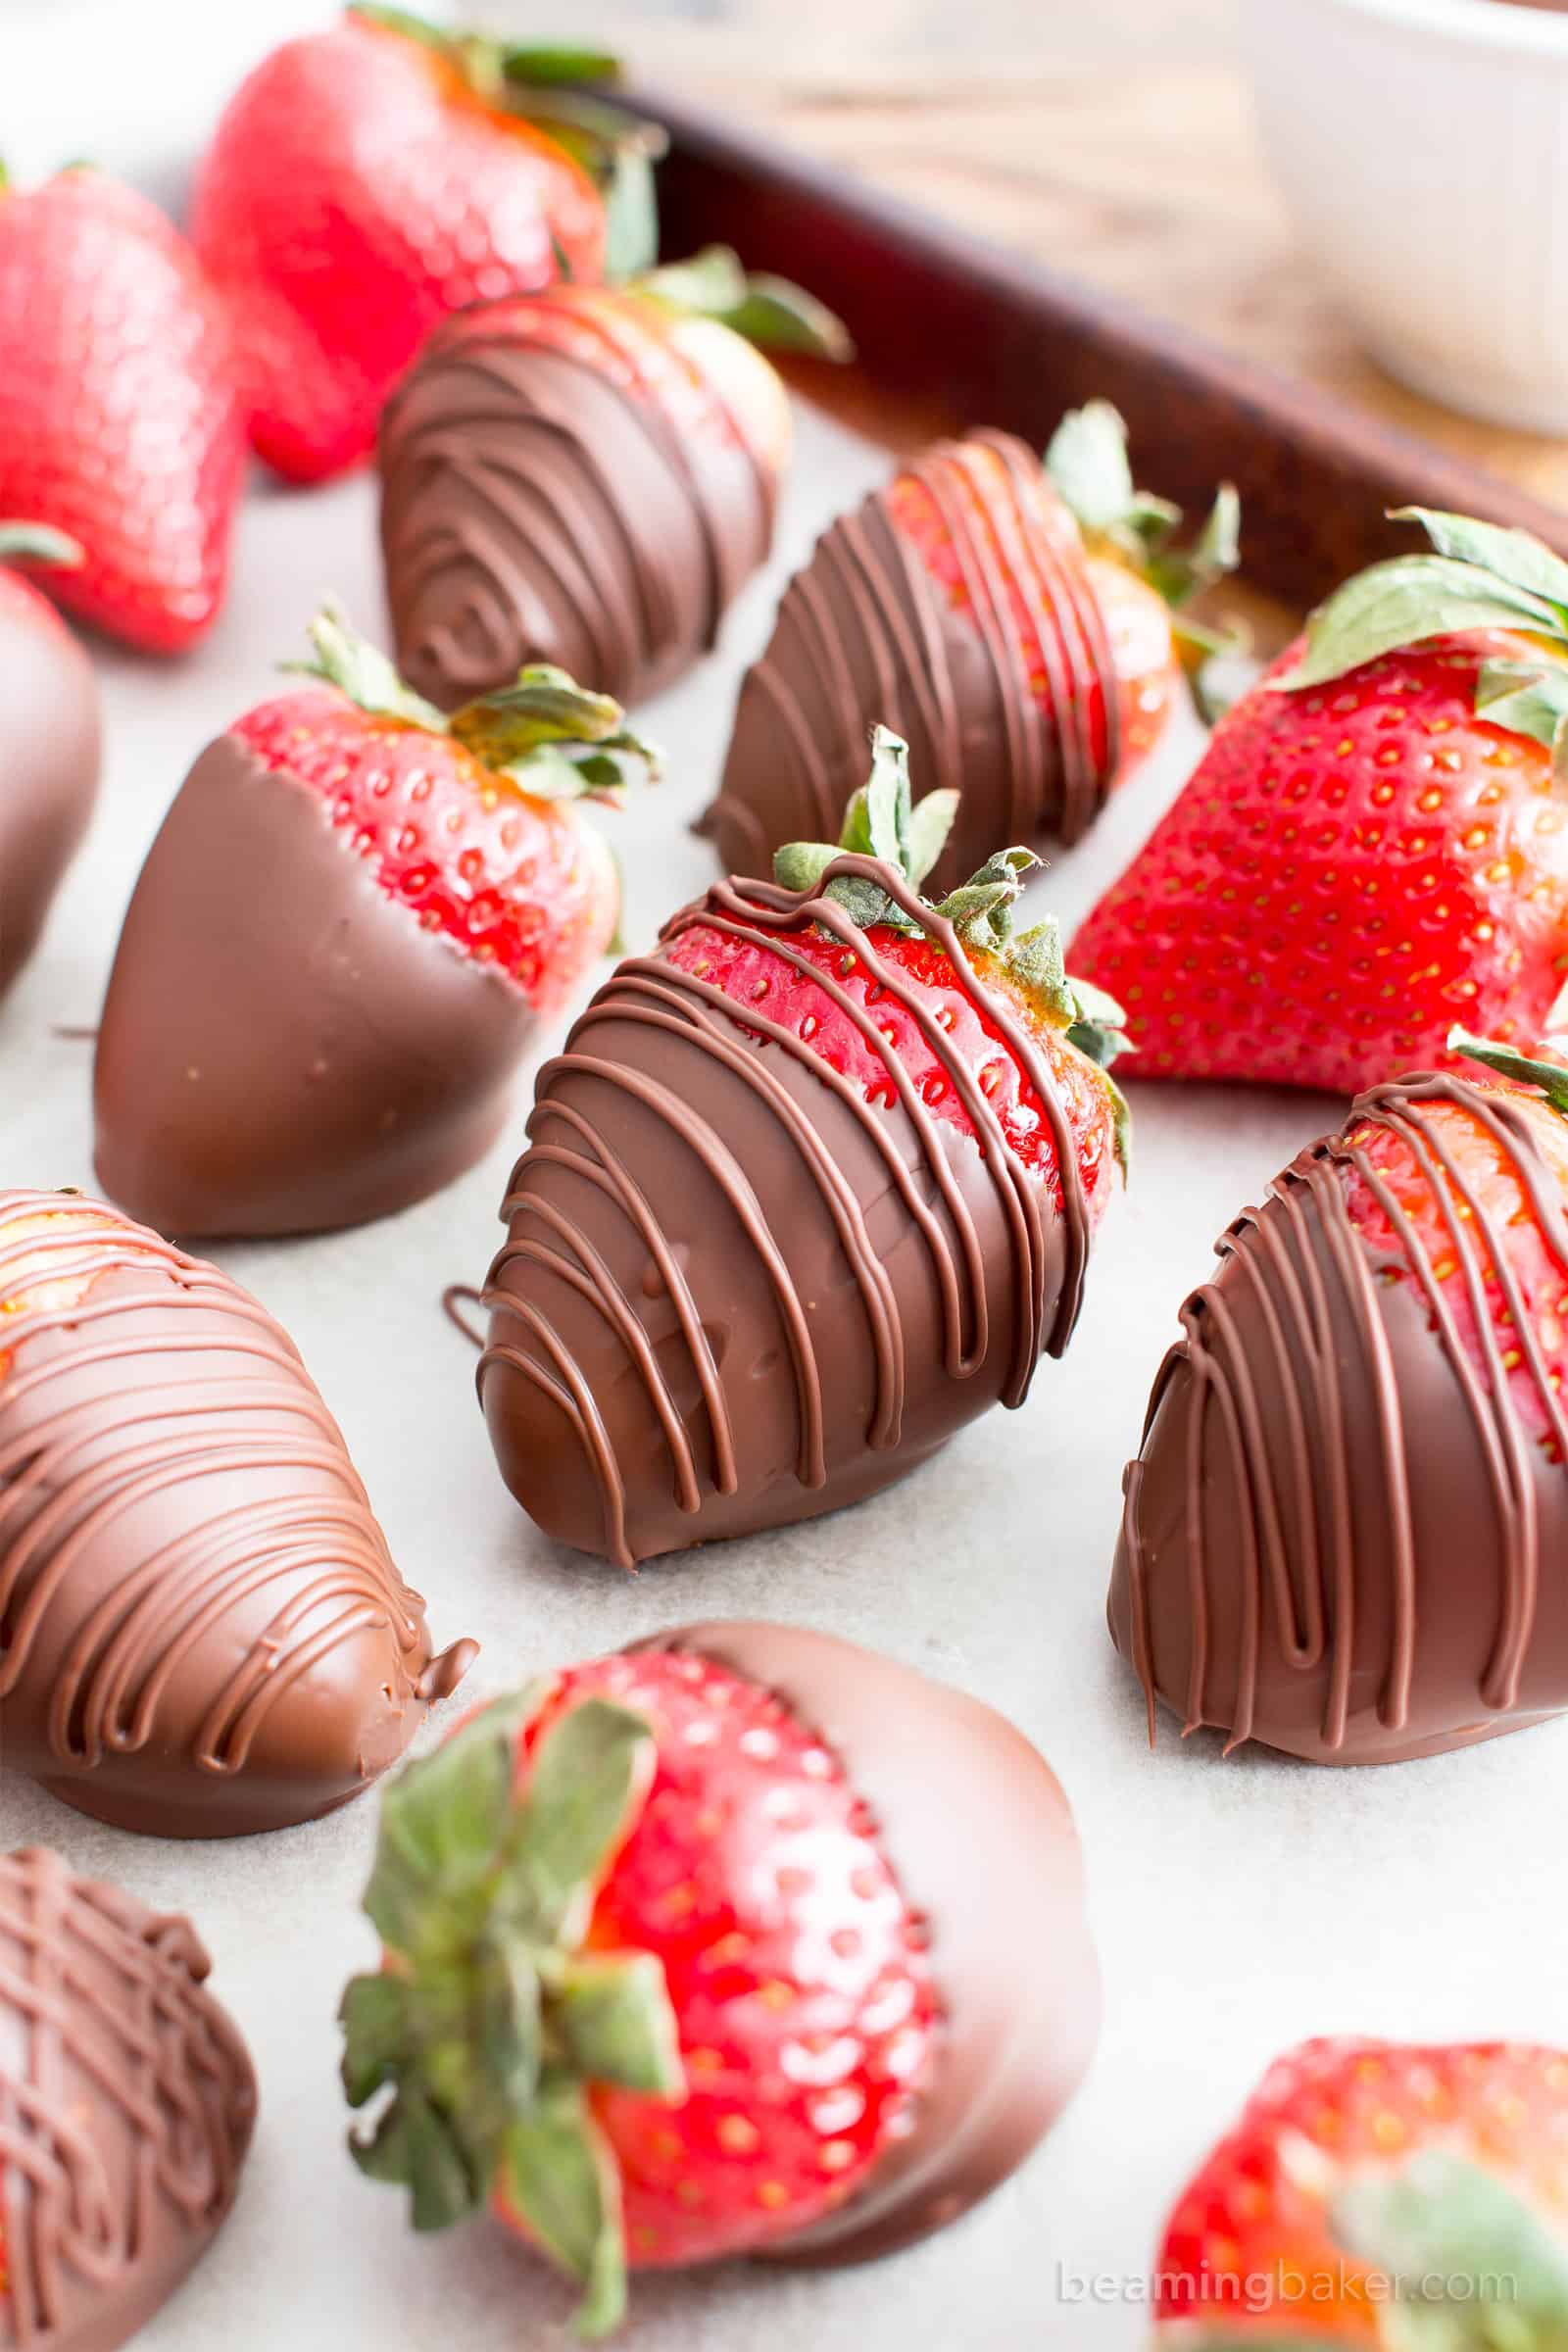 How to Make Chocolate Dipped Strawberries Recipe (V, GF): learn how easy it is to make beautiful, decadently delicious chocolate dipped strawberries! #Vegan #GlutenFree #DairyFree #Paleo #ValentinesDay #Dessert | Recipe on BeamingBaker.com